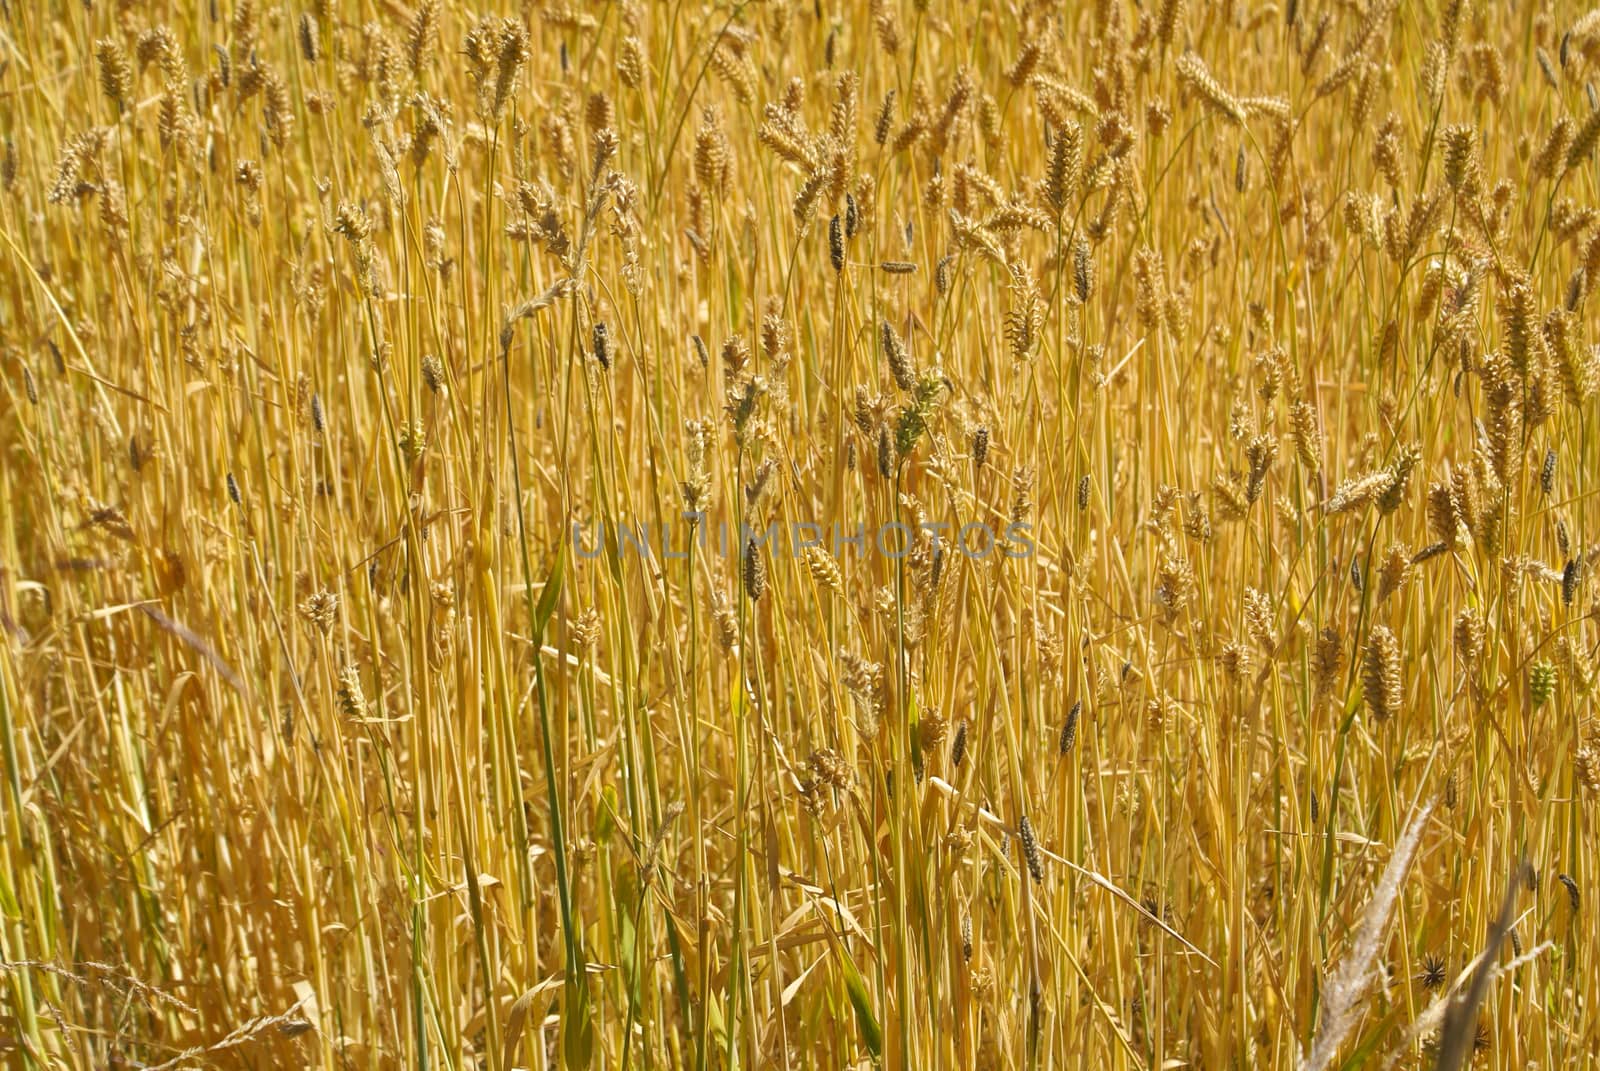 Golden grain, symbol of food and plenty